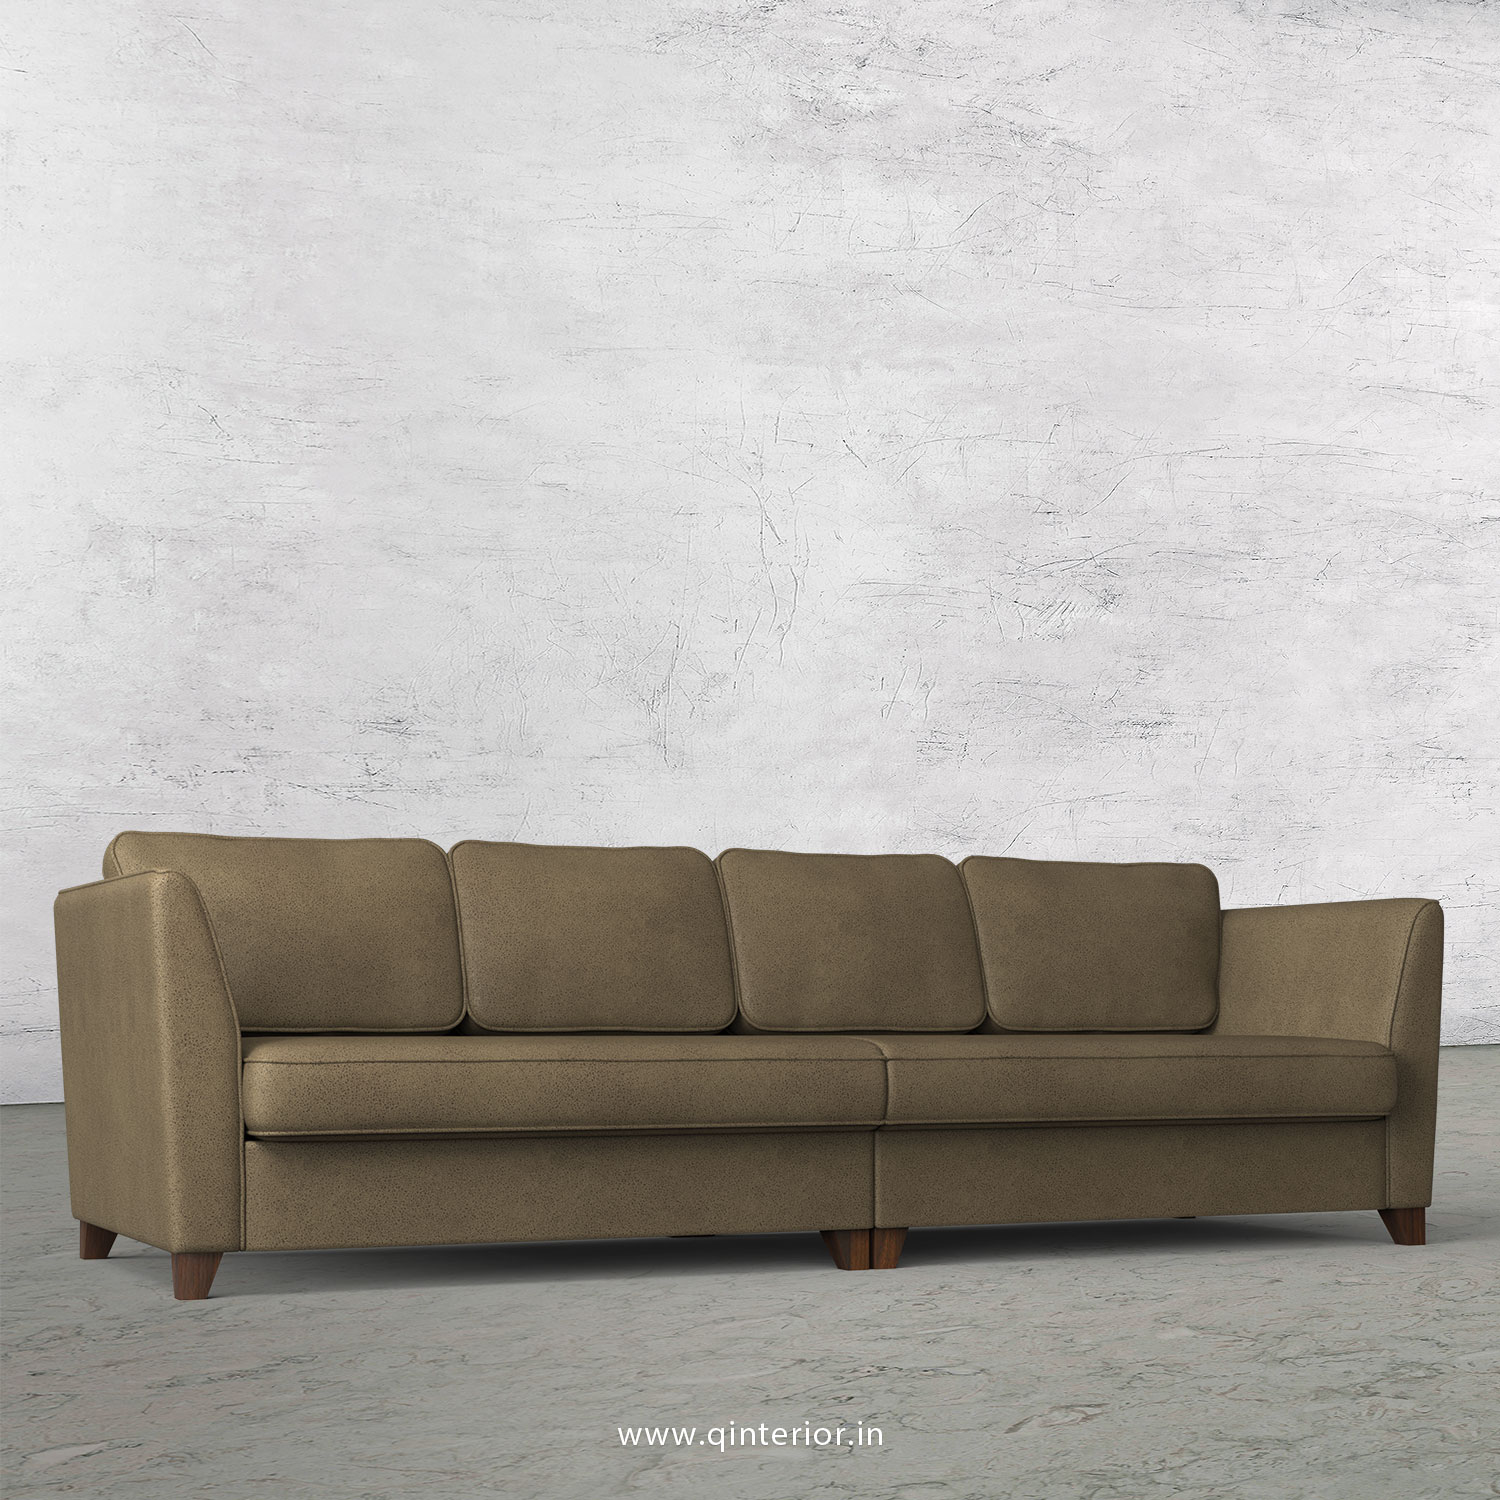 Kingstone 4 Seater Sofa in Fab Leather Fabric - SFA004 FL06